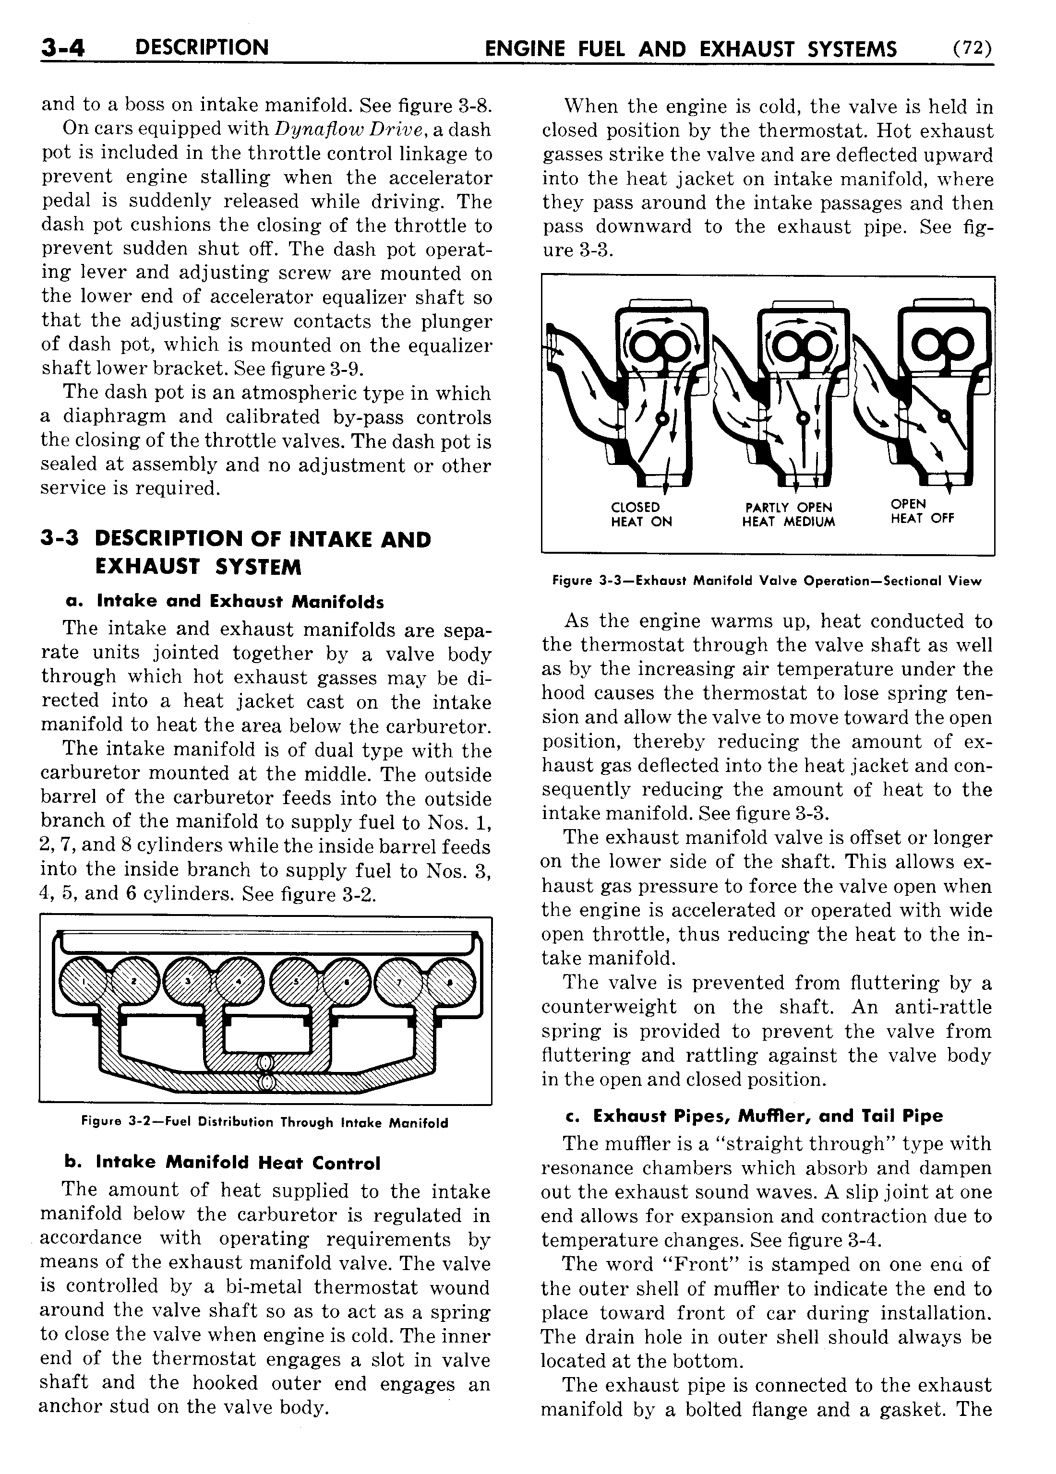 n_04 1951 Buick Shop Manual - Engine Fuel & Exhaust-004-004.jpg